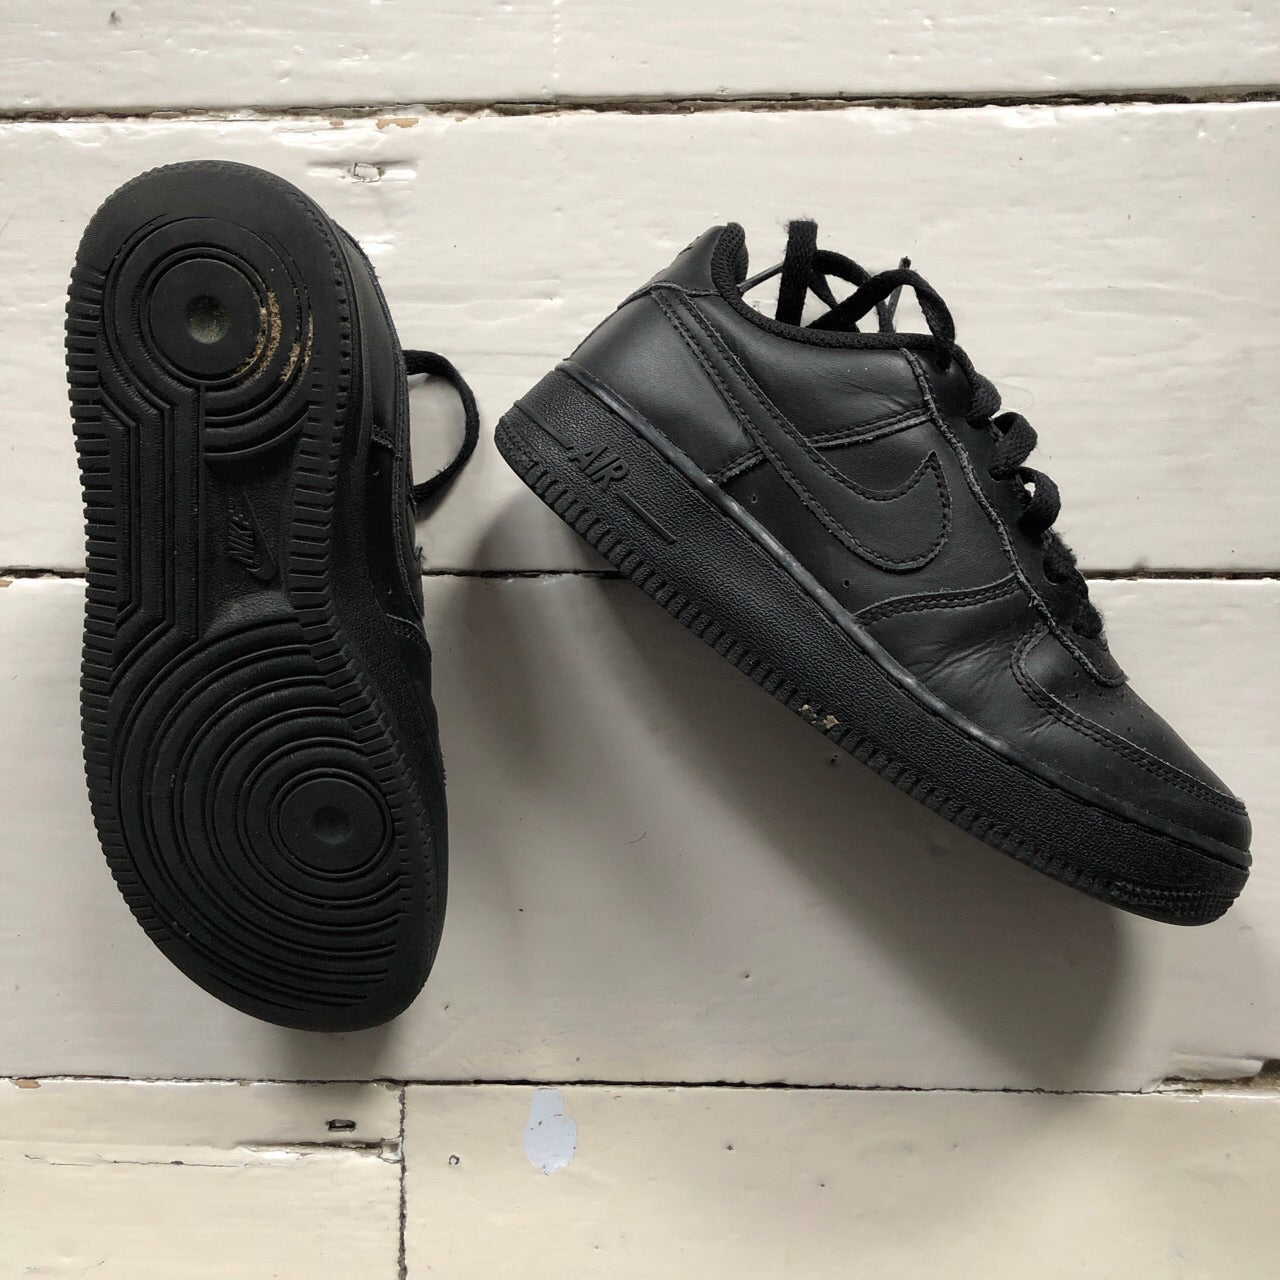 Nike Air Force 1 Black (UK 3.5)